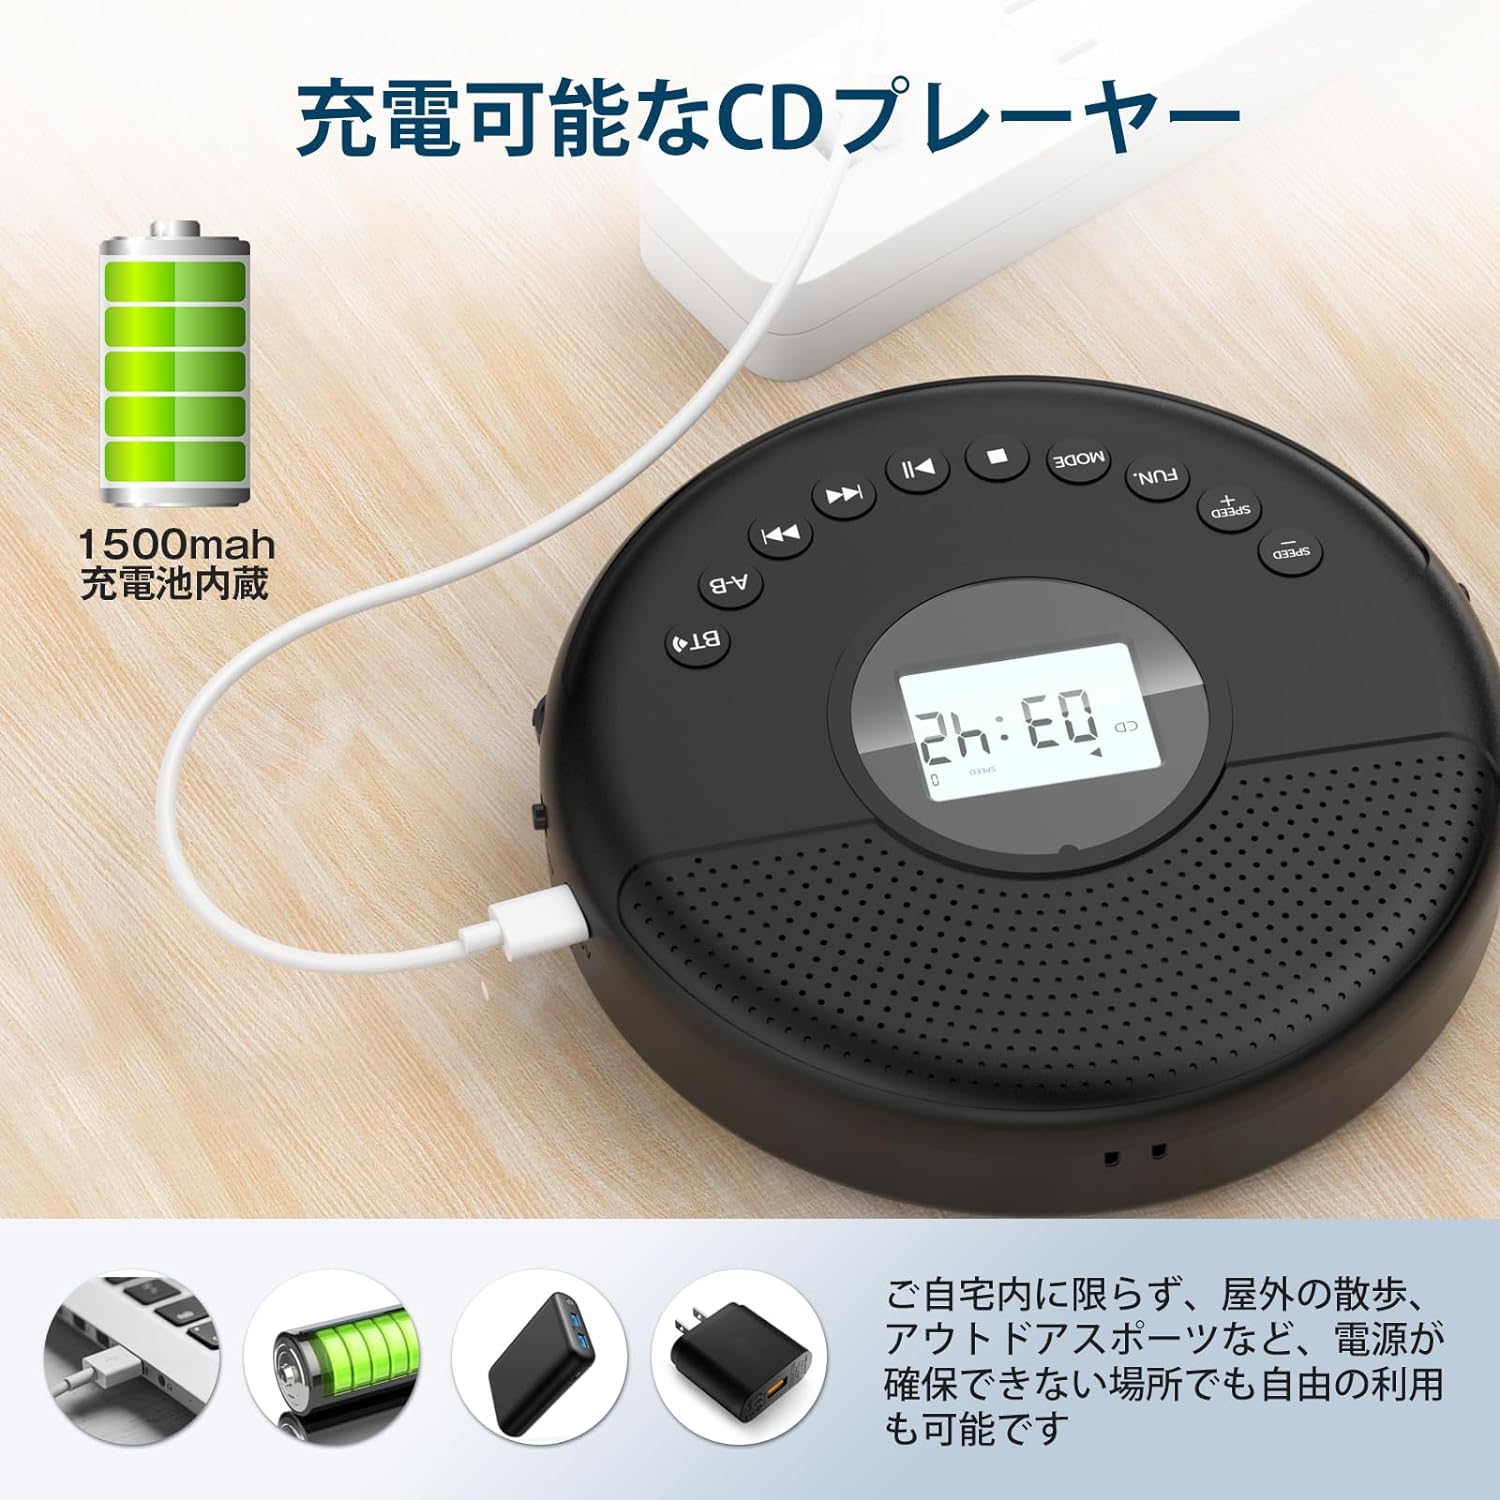 CD Player Portable Bluetooth 1500mAh Battery Dual Speaker Black